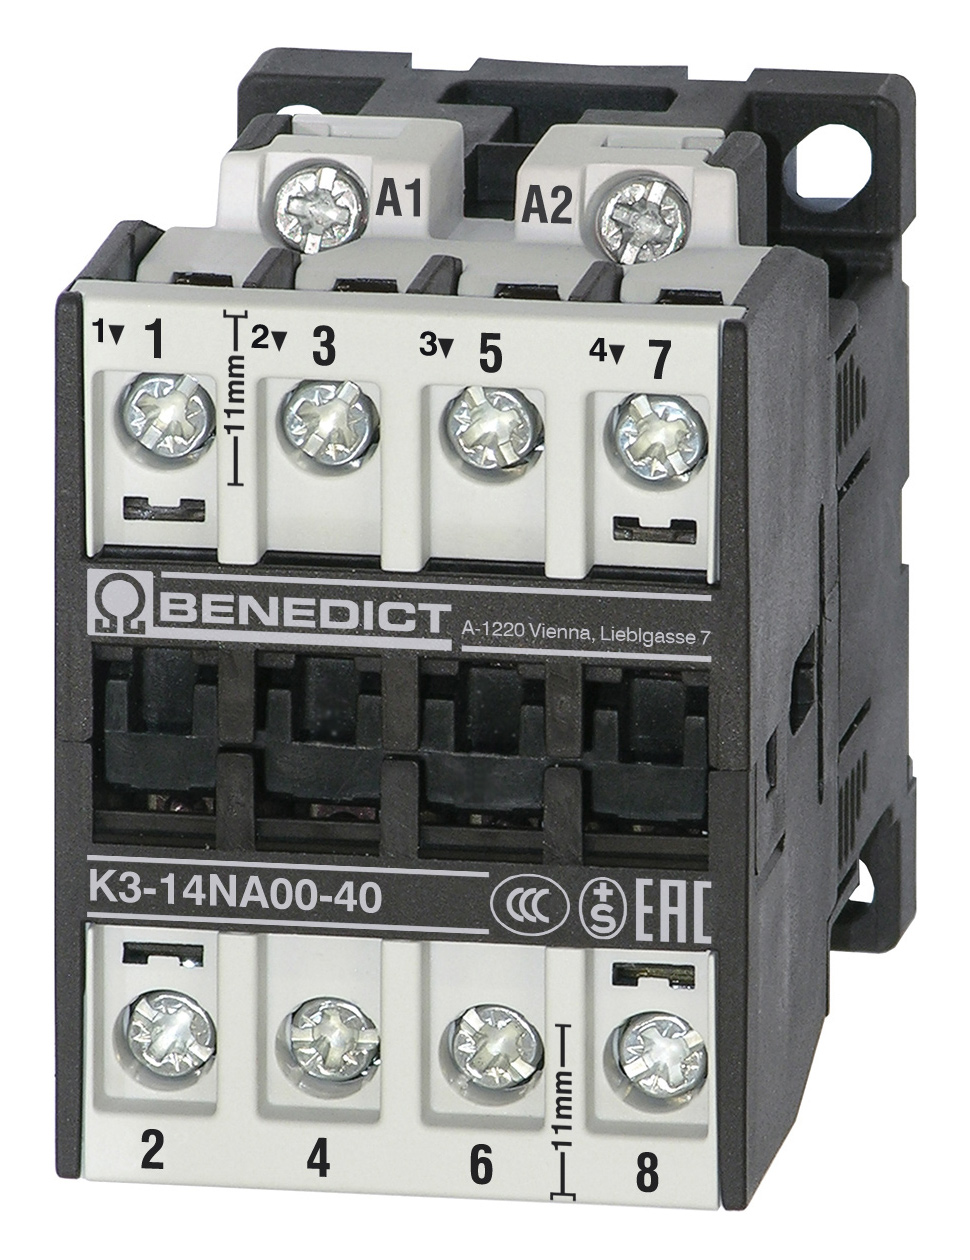  K3-14NA00-40 42 BENEDICT